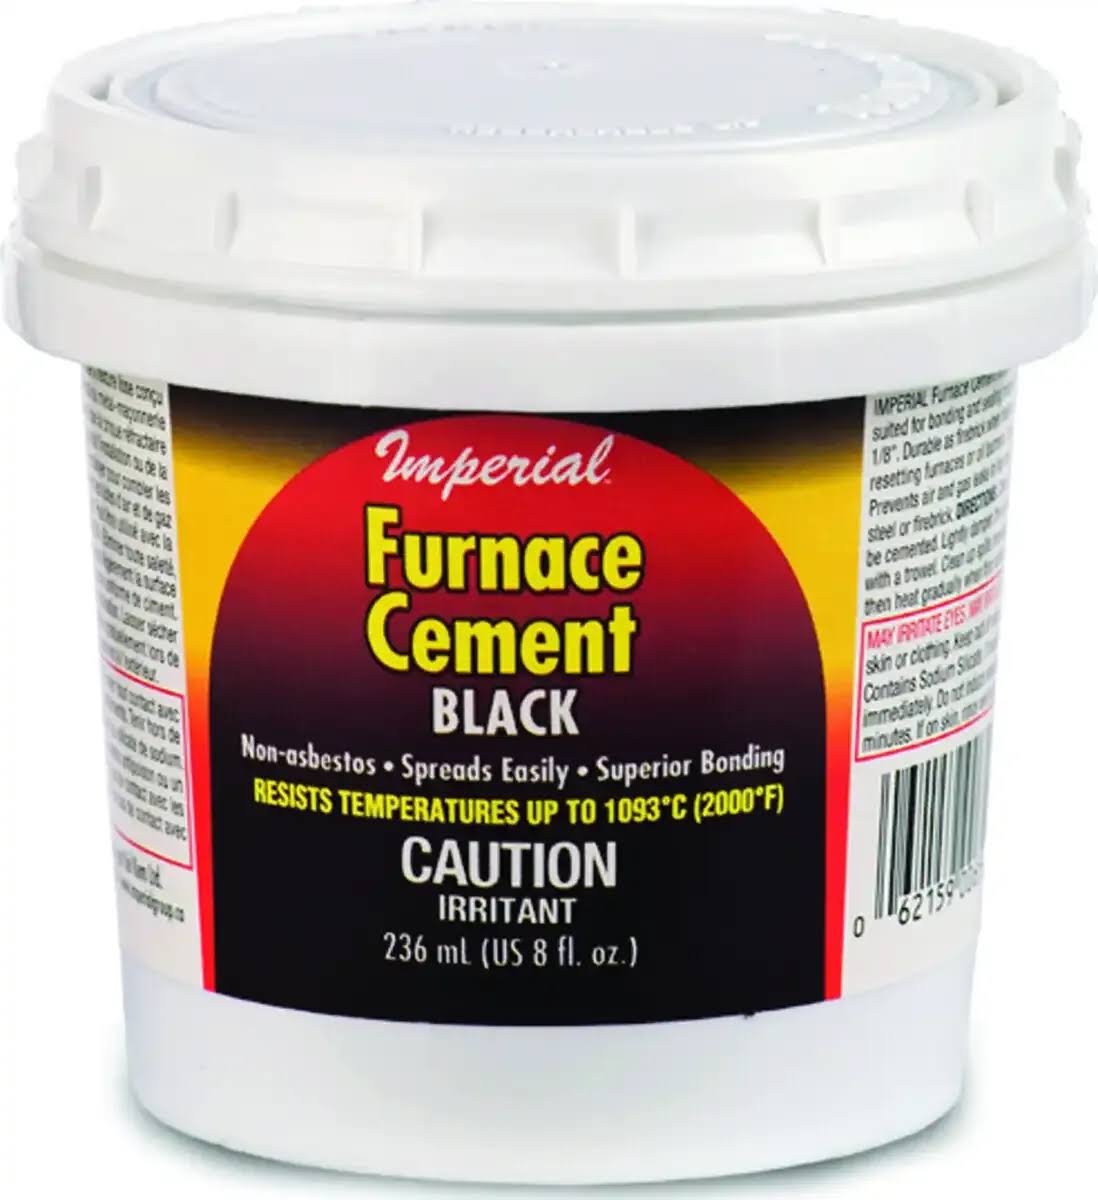 Imperial Kk0077a Furnace Cement - Black, 8oz